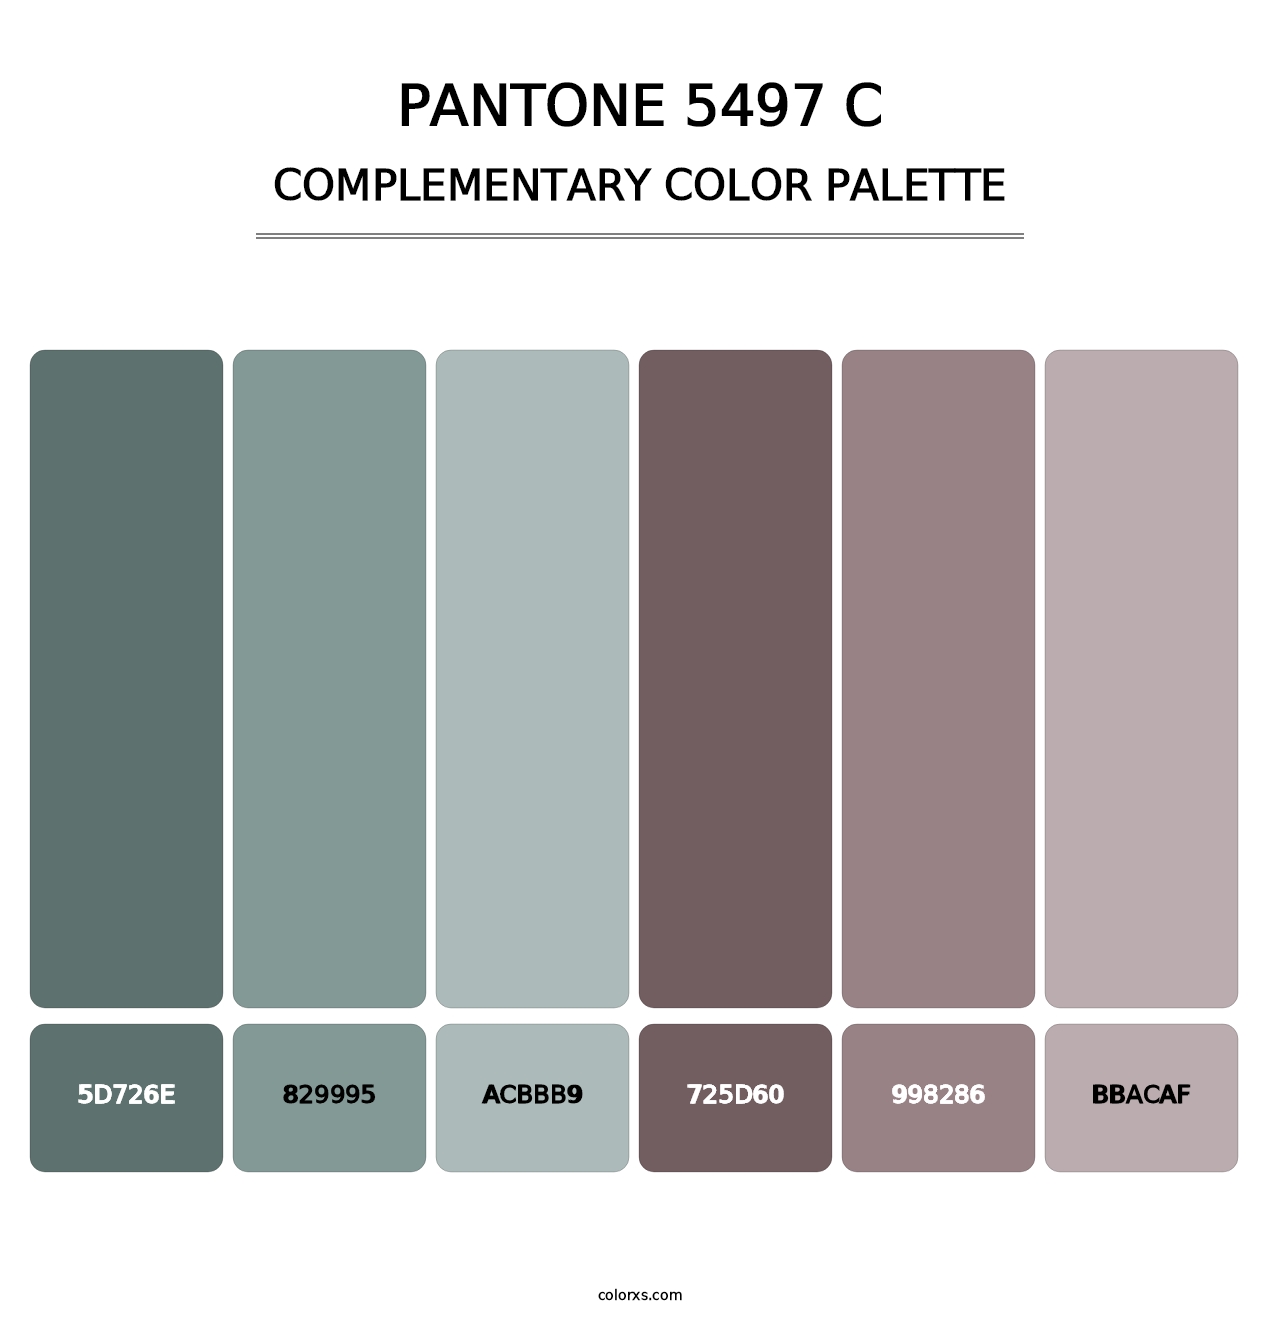 PANTONE 5497 C - Complementary Color Palette